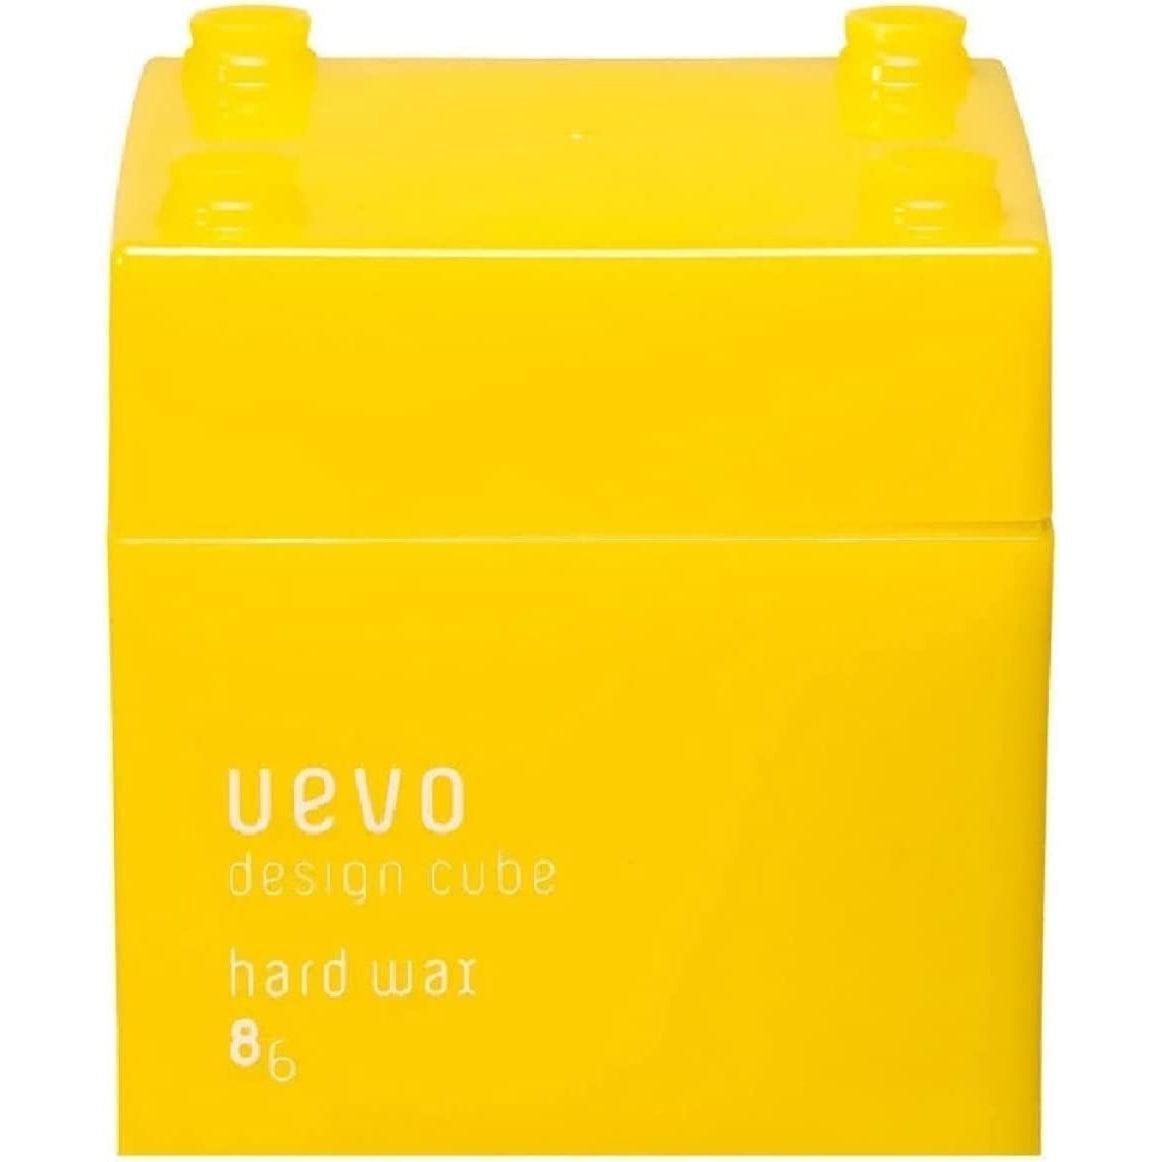 P-1-UEVO-HARWAX-HD80-Uevo Design Cube Hard Hair Wax 80g.jpg